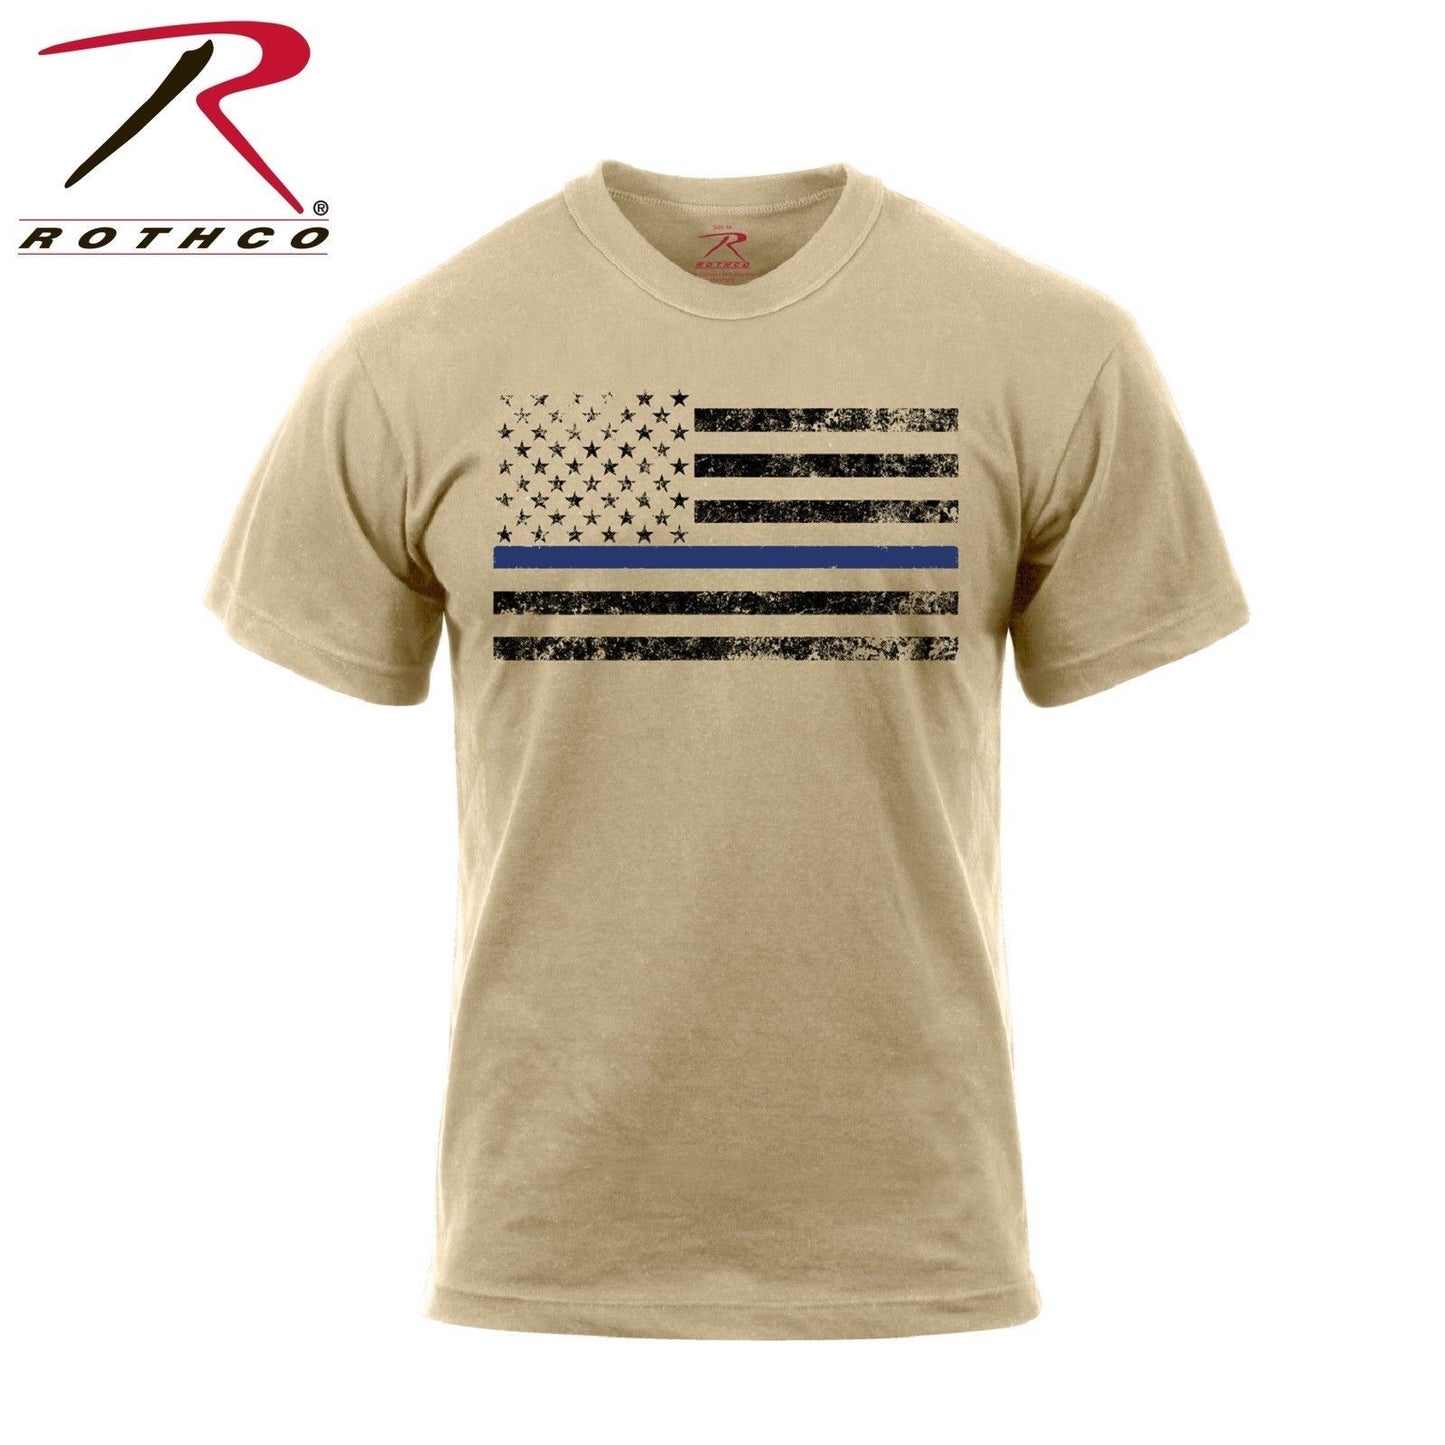 Rothco Thin Blue Line T-Shirt - Desert Sand TBL American Flag Casual Tee Shirt